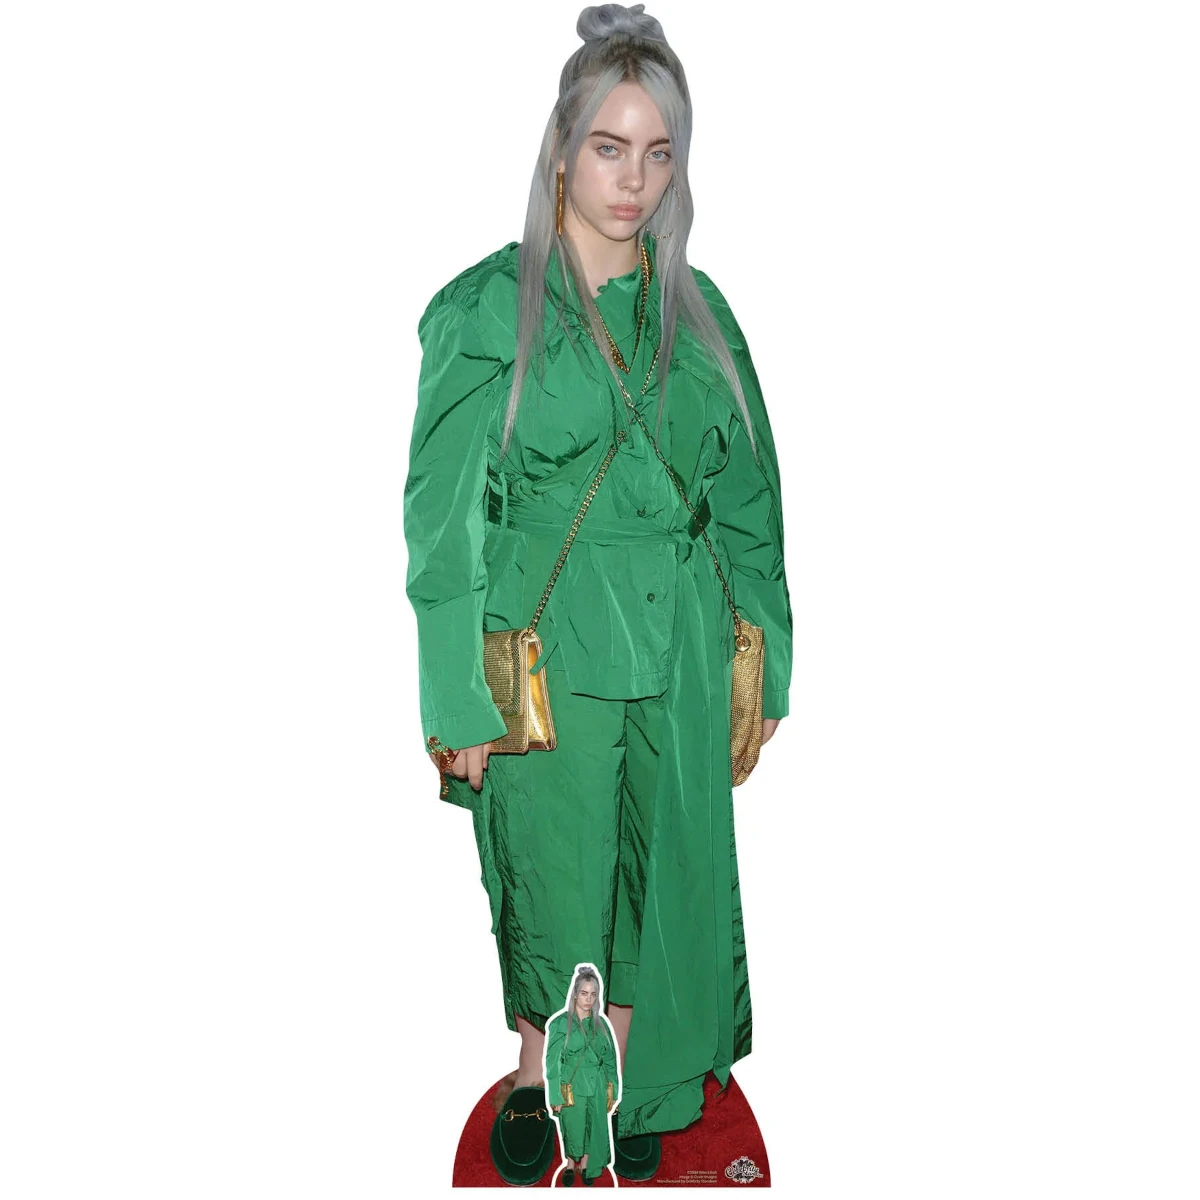 CS804 Billie Eilish 'Green Suit' (American SingerSongwriter) Lifesize + Mini Cardboard Cutout Standee Front